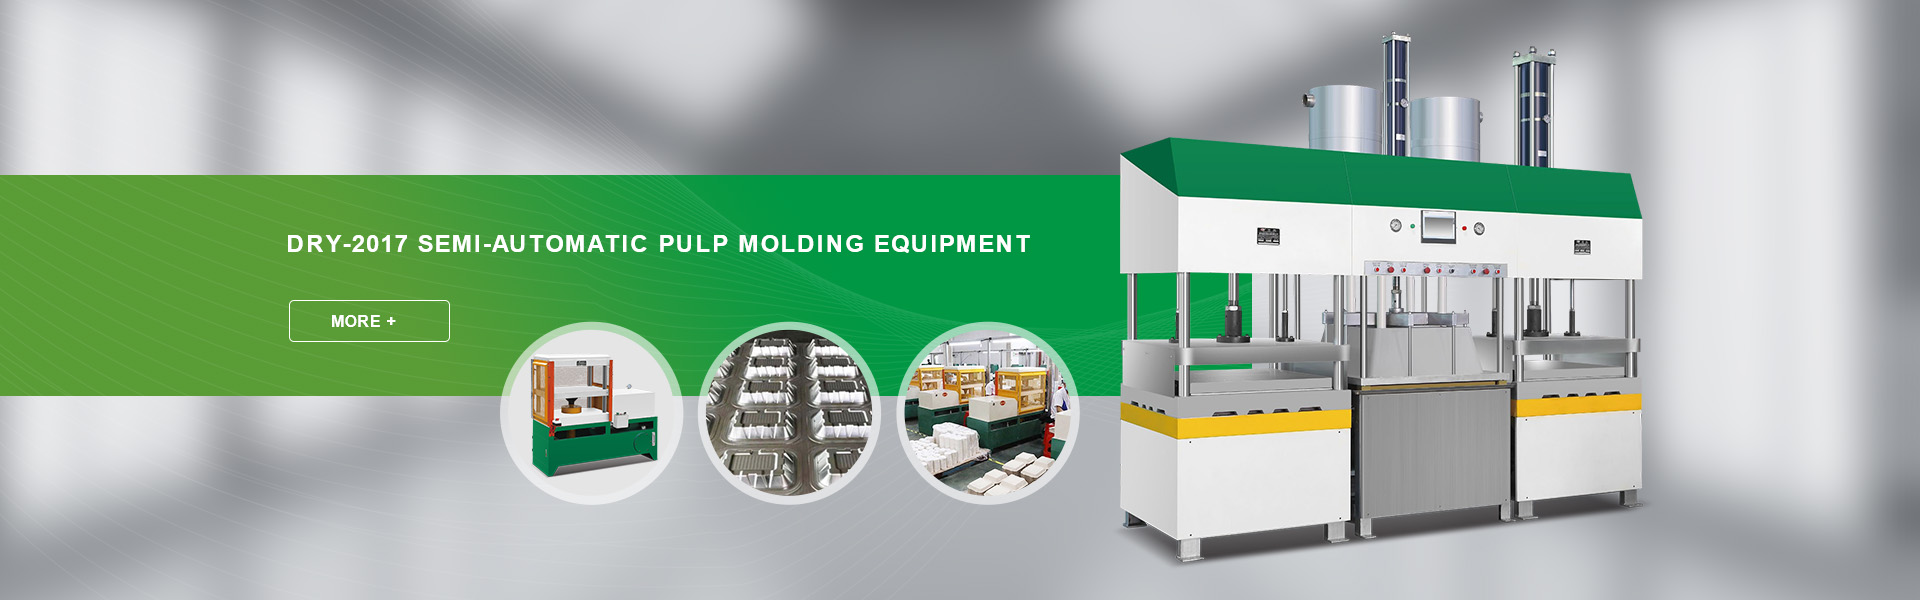 DRY-2017 Semi-automatic pulp molding equipment